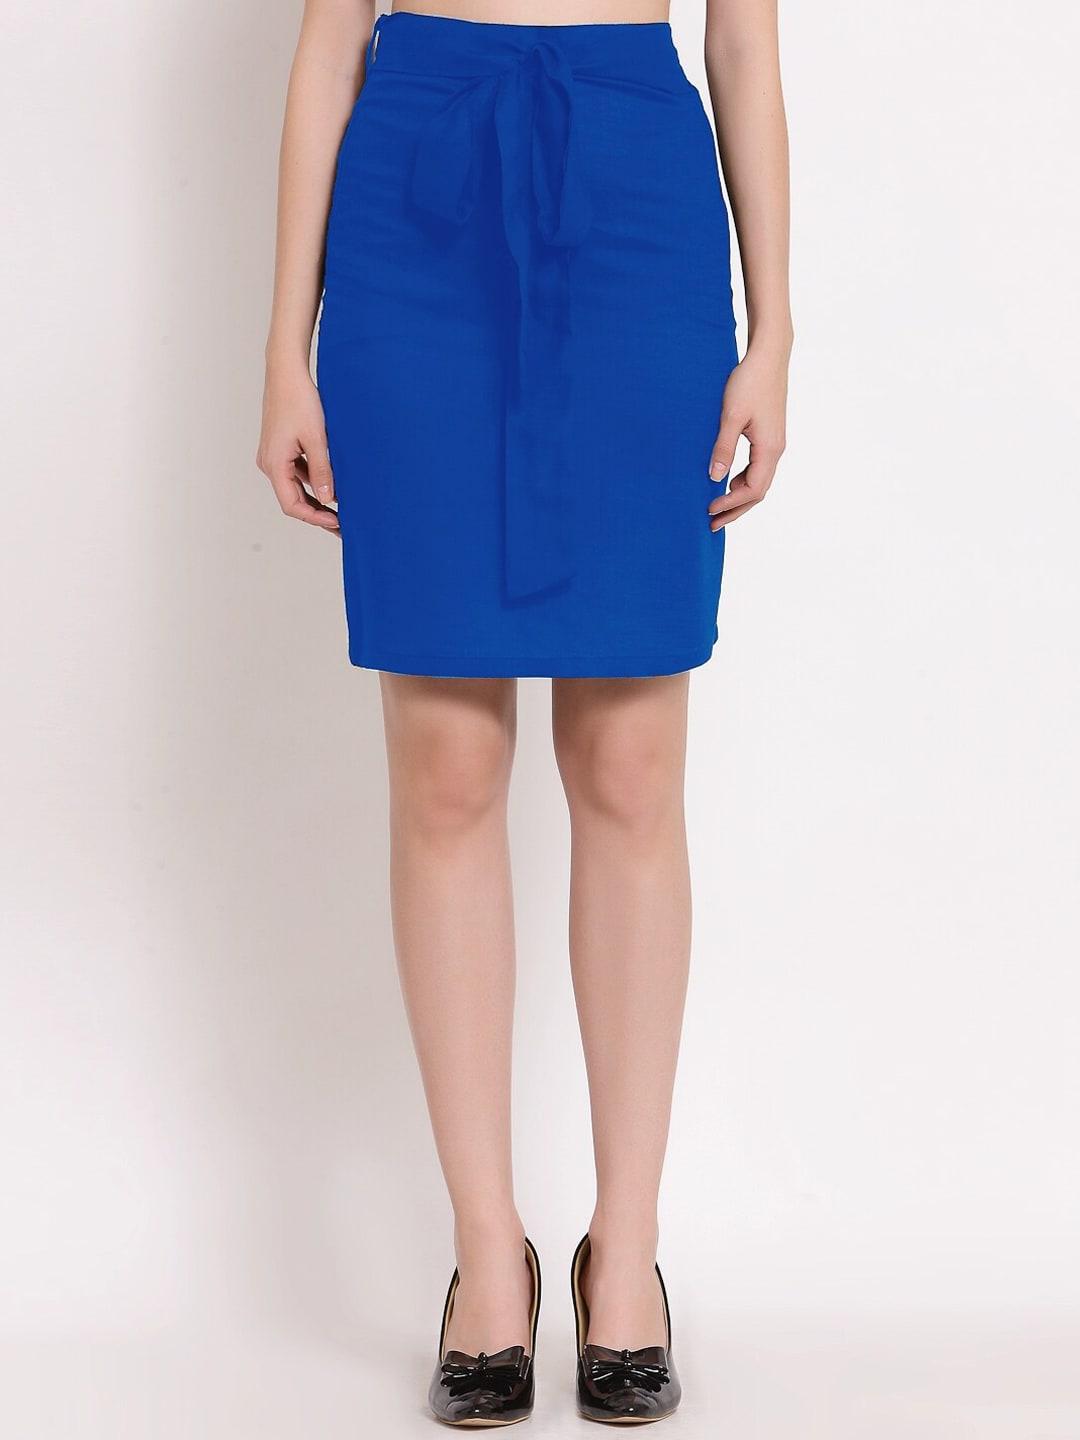 patrorna women blue solid pencil skirt